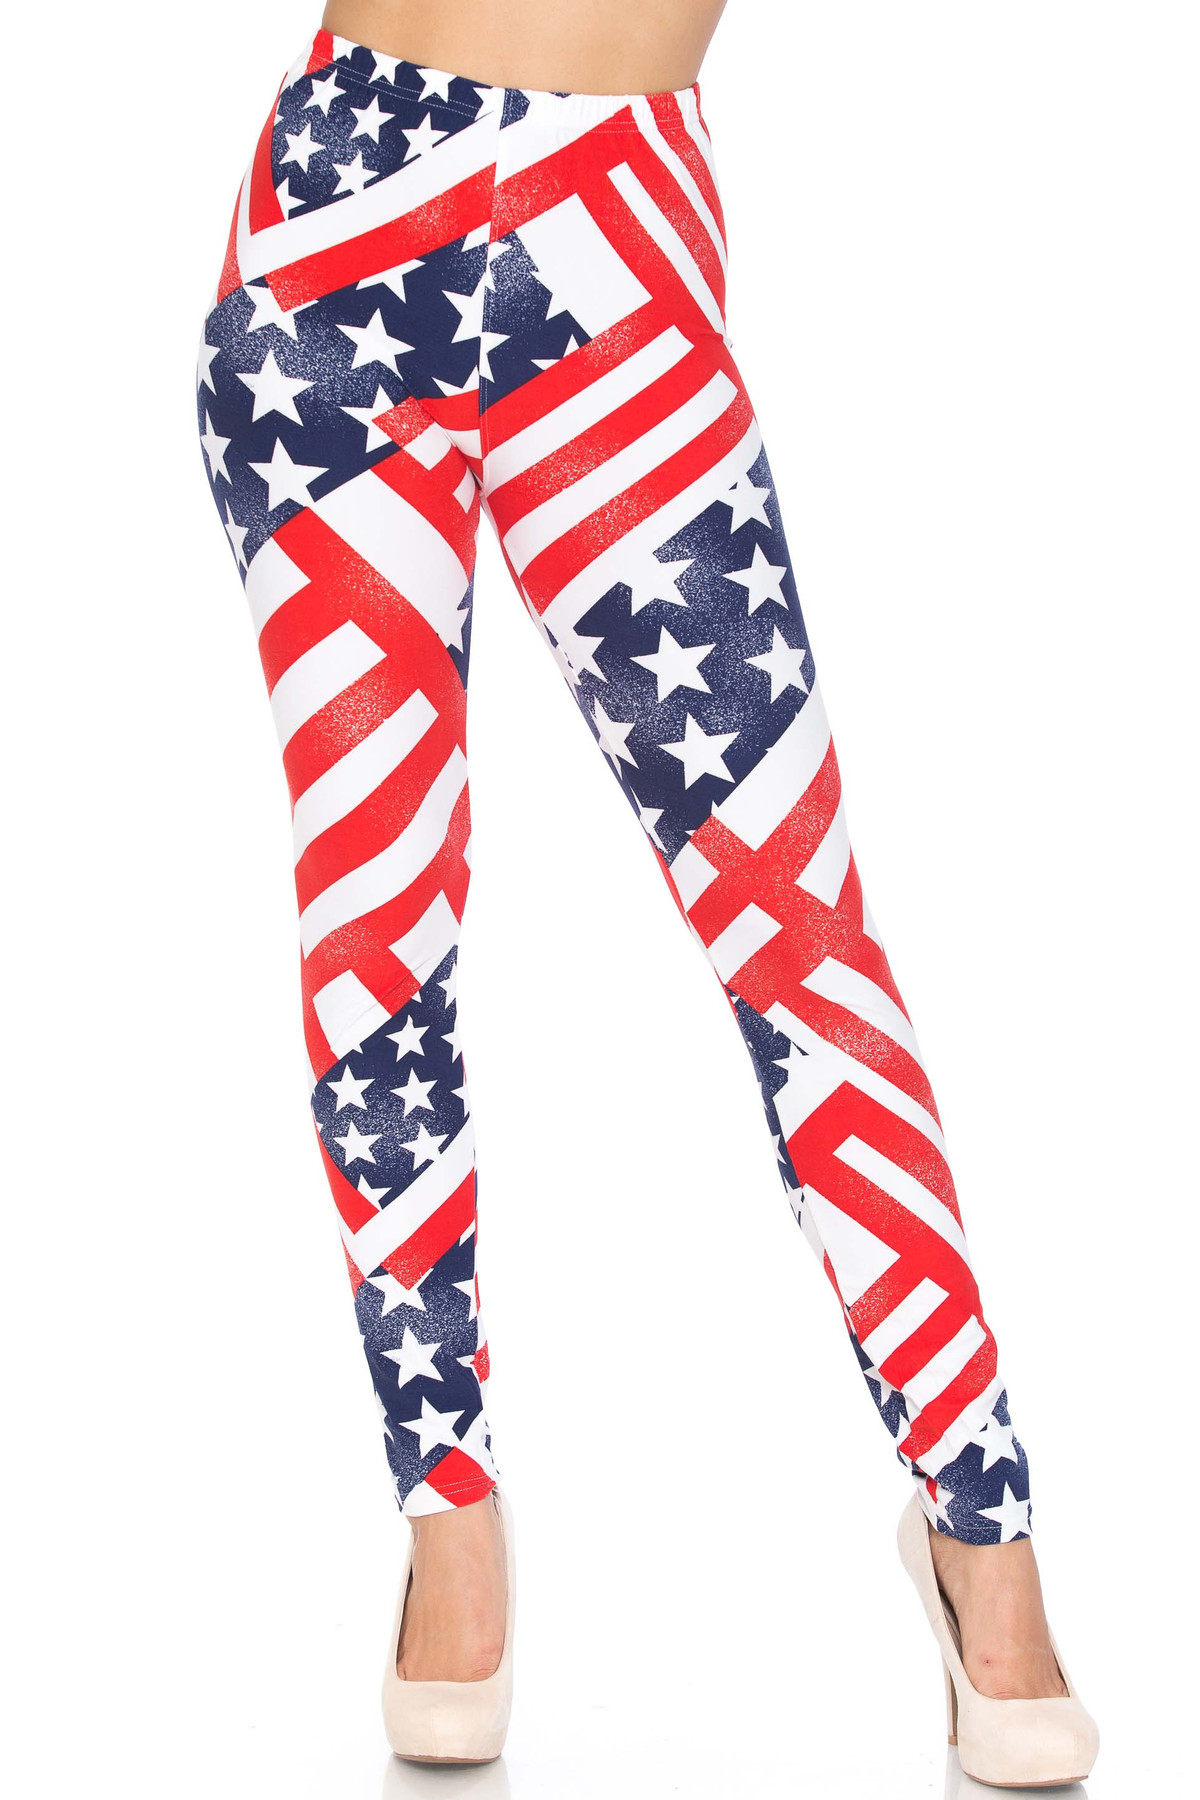 Wholesale Patriot USA Flag Leggings | Leggings Wholesale Superstore